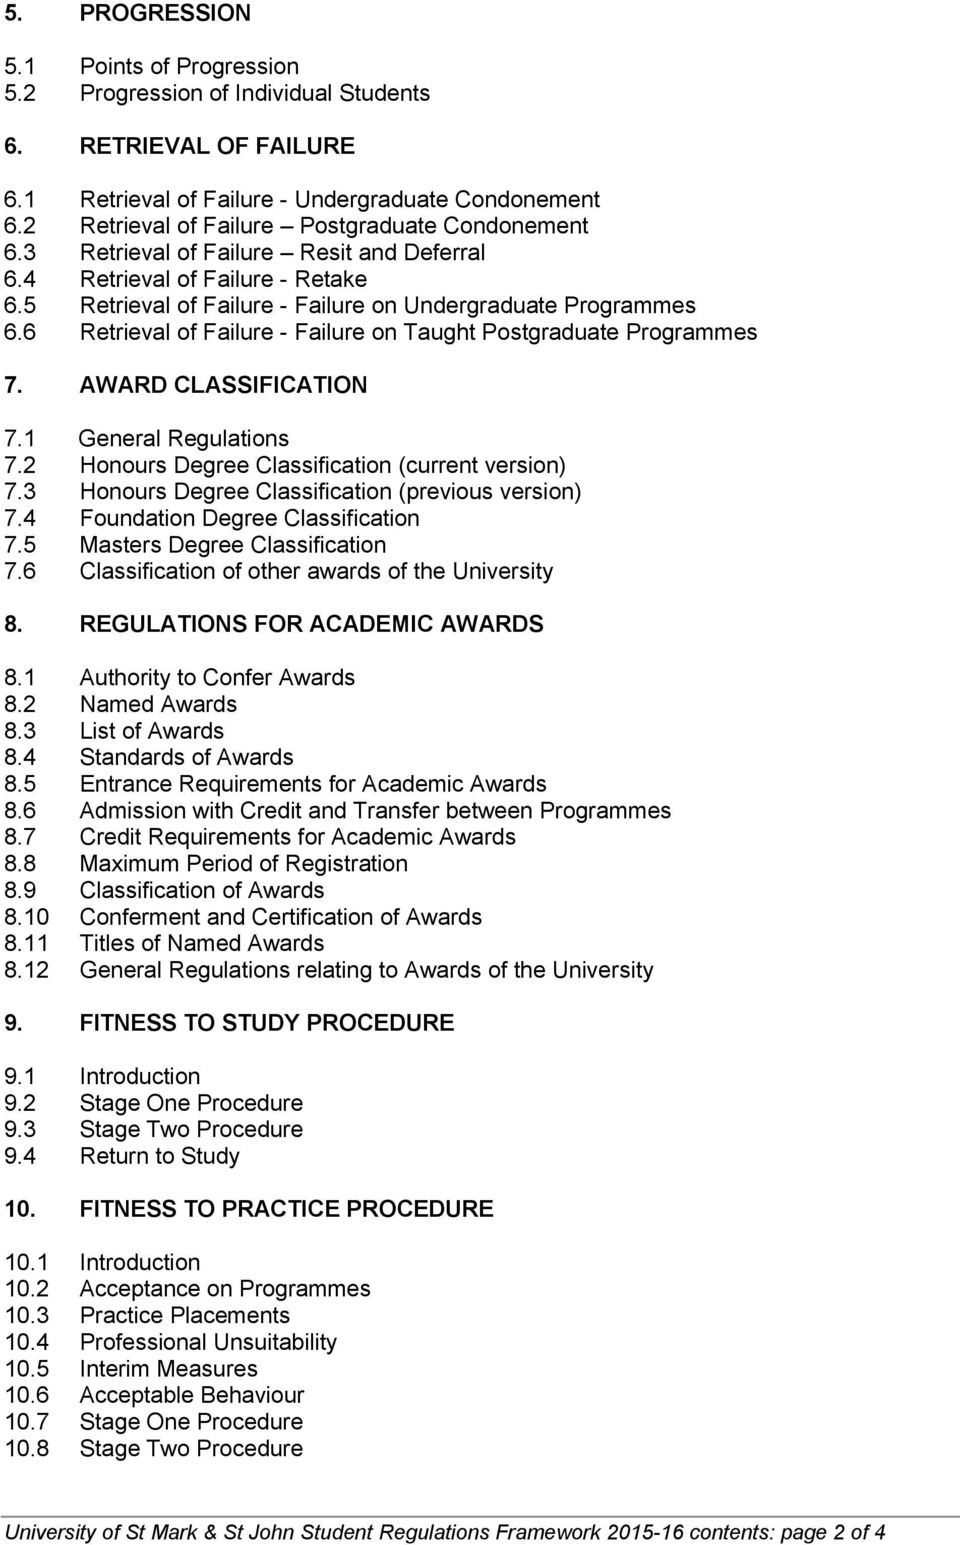 6 Retrieval of Failure - Failure on Taught Postgraduate Programmes 7. AWARD CLASSIFICATION 7.1 General Regulations 7.2 Honours Degree Classification (current version) 7.